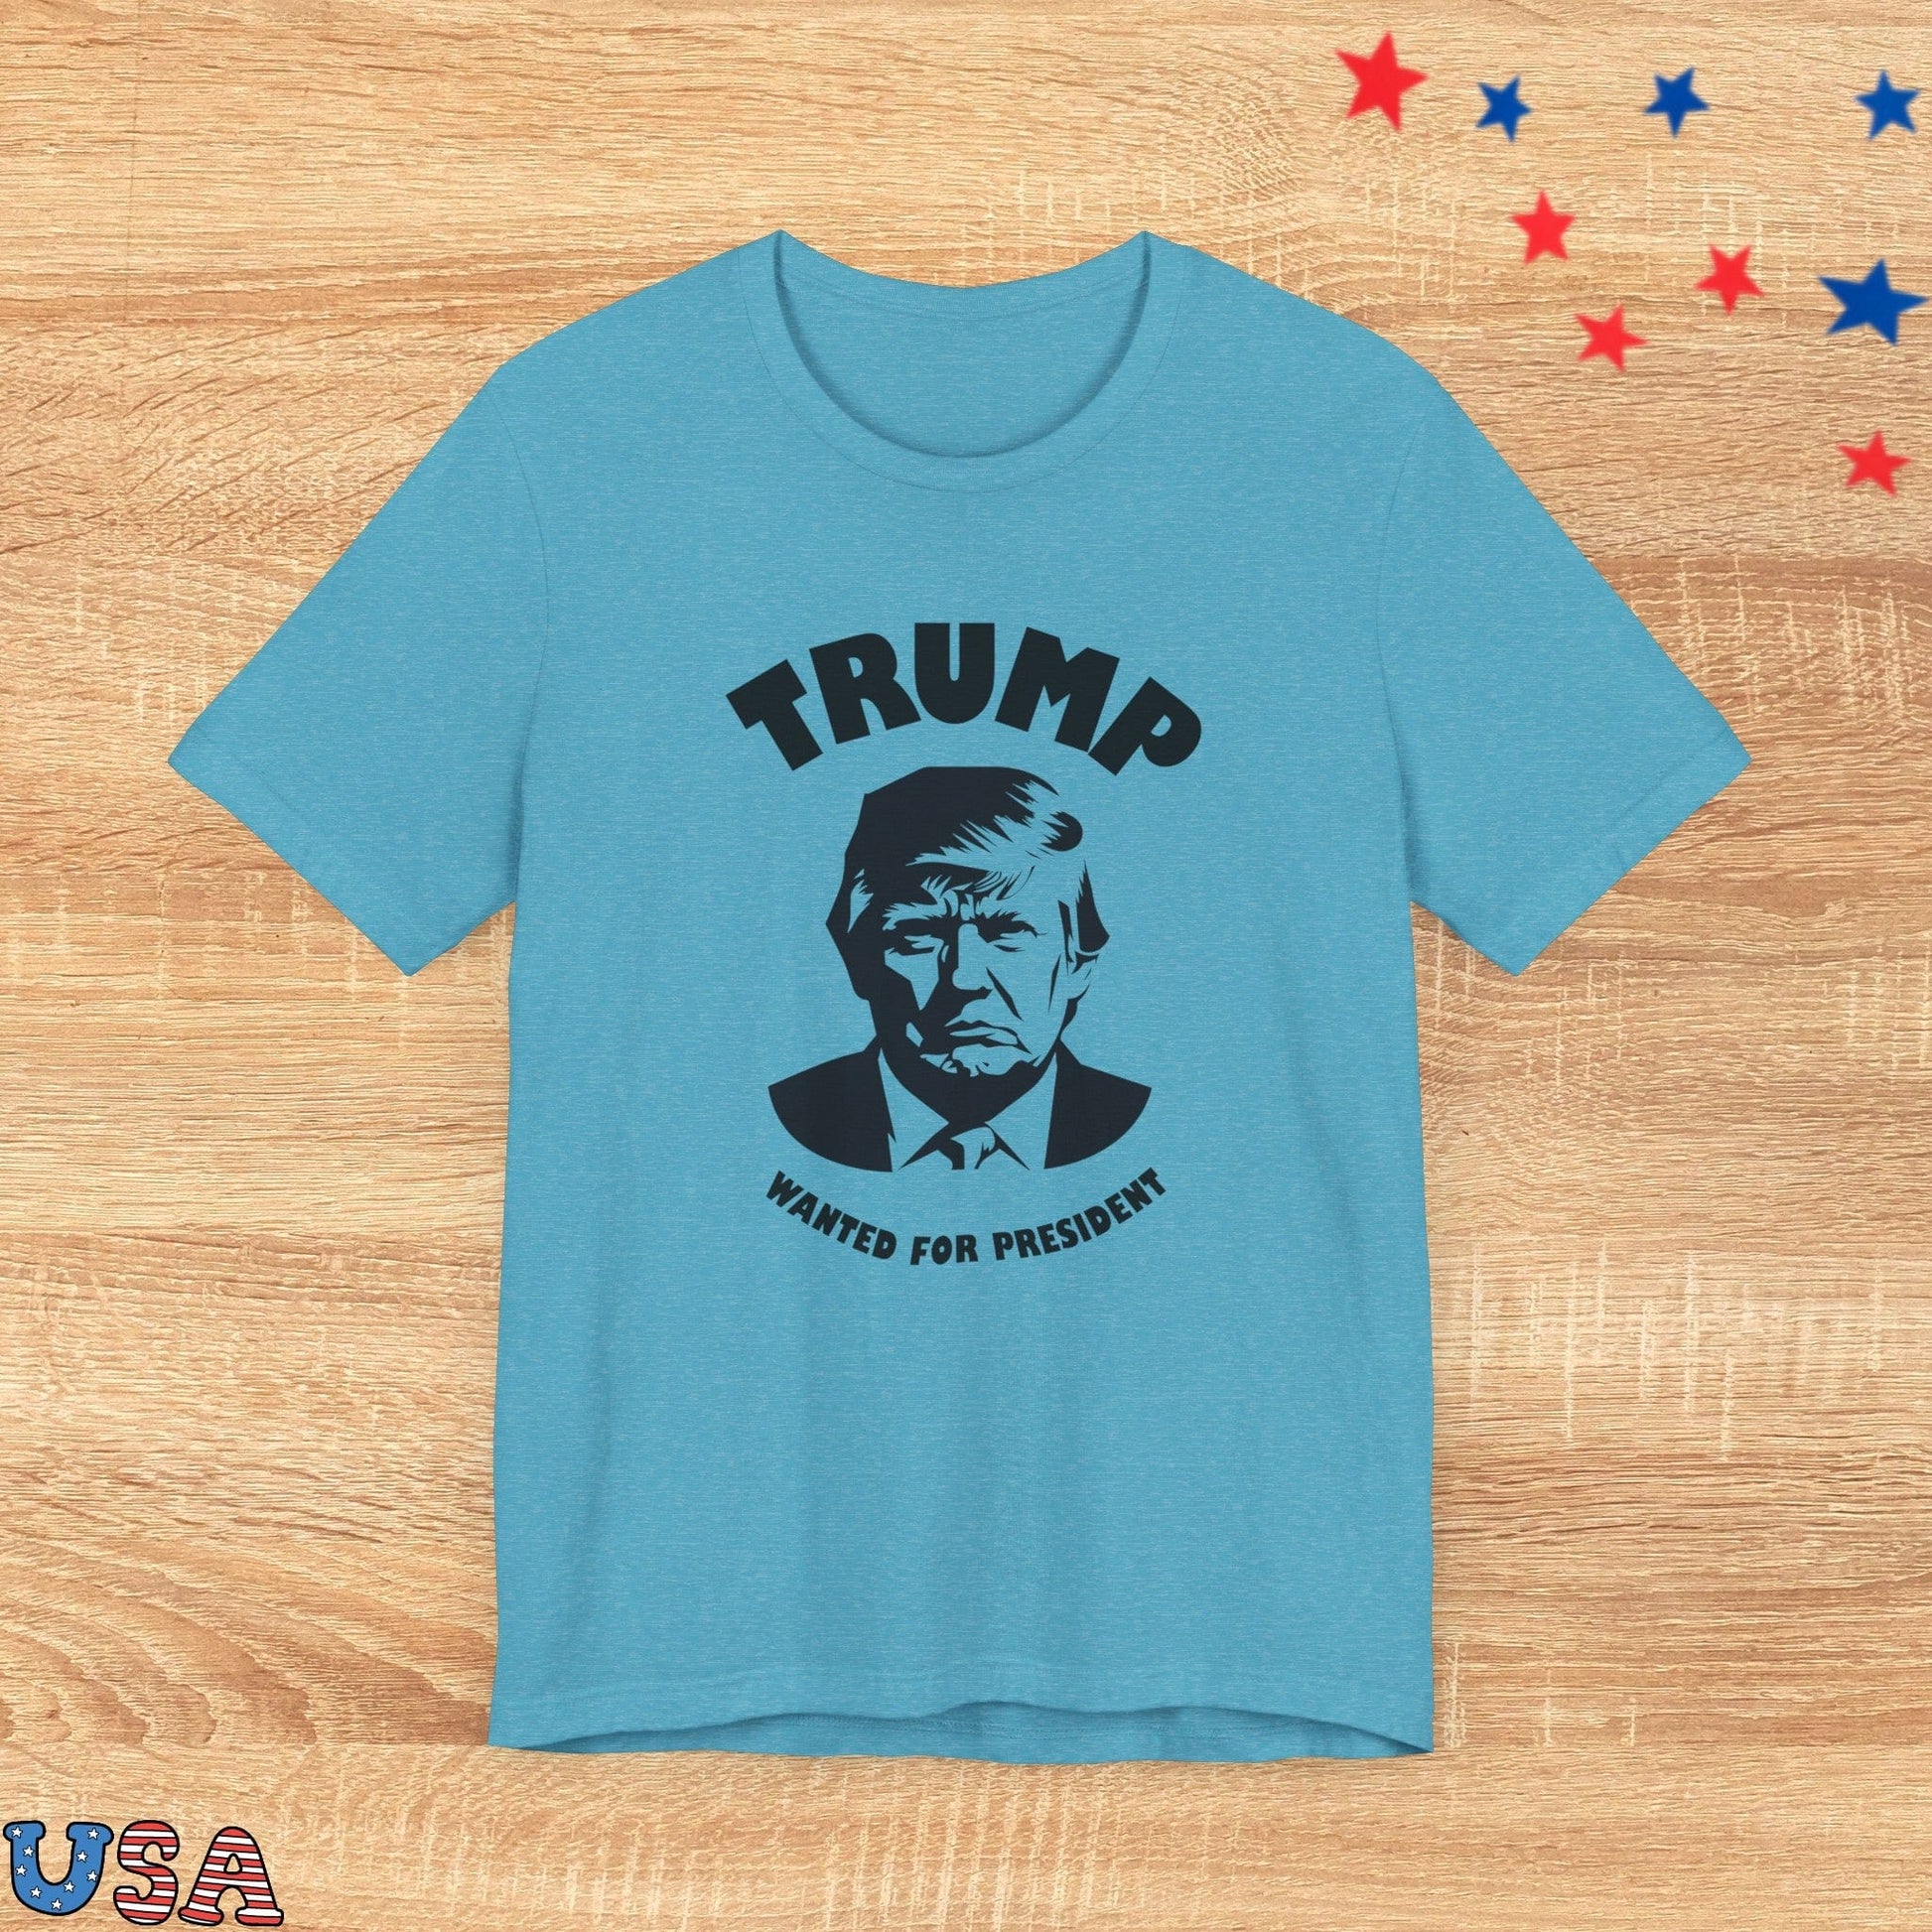 patriotic stars T-Shirt Heather Aqua / XS Trump Wanted For President